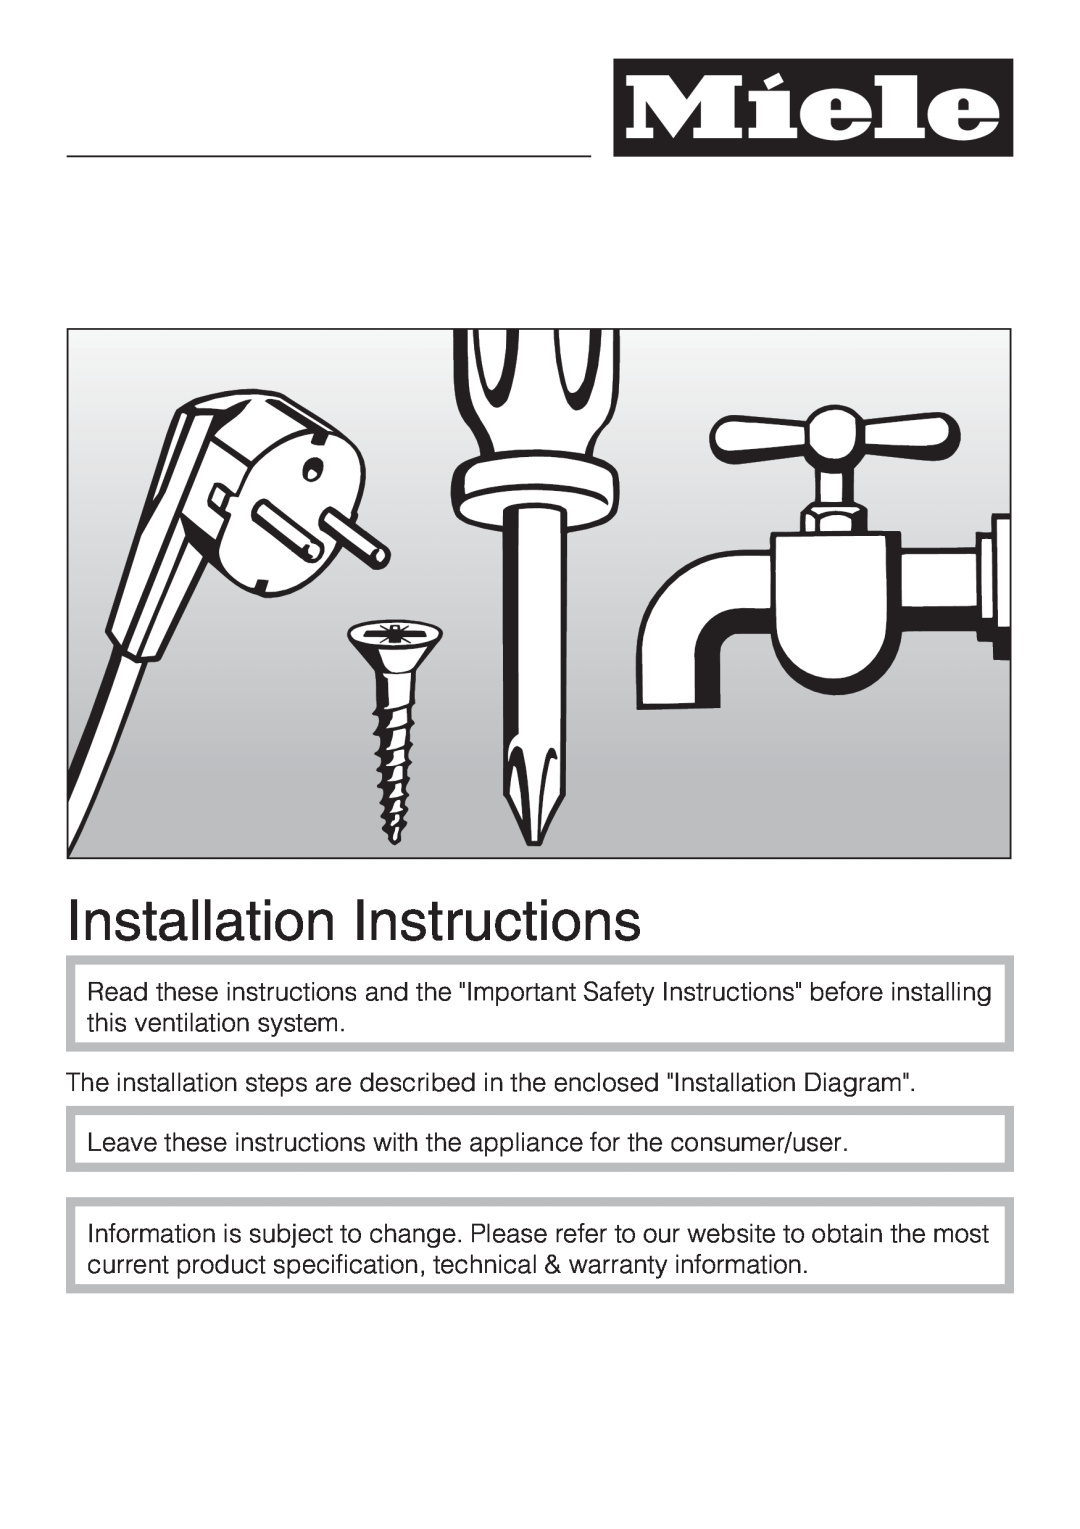 Miele DA 220-4 installation instructions Installation Instructions 